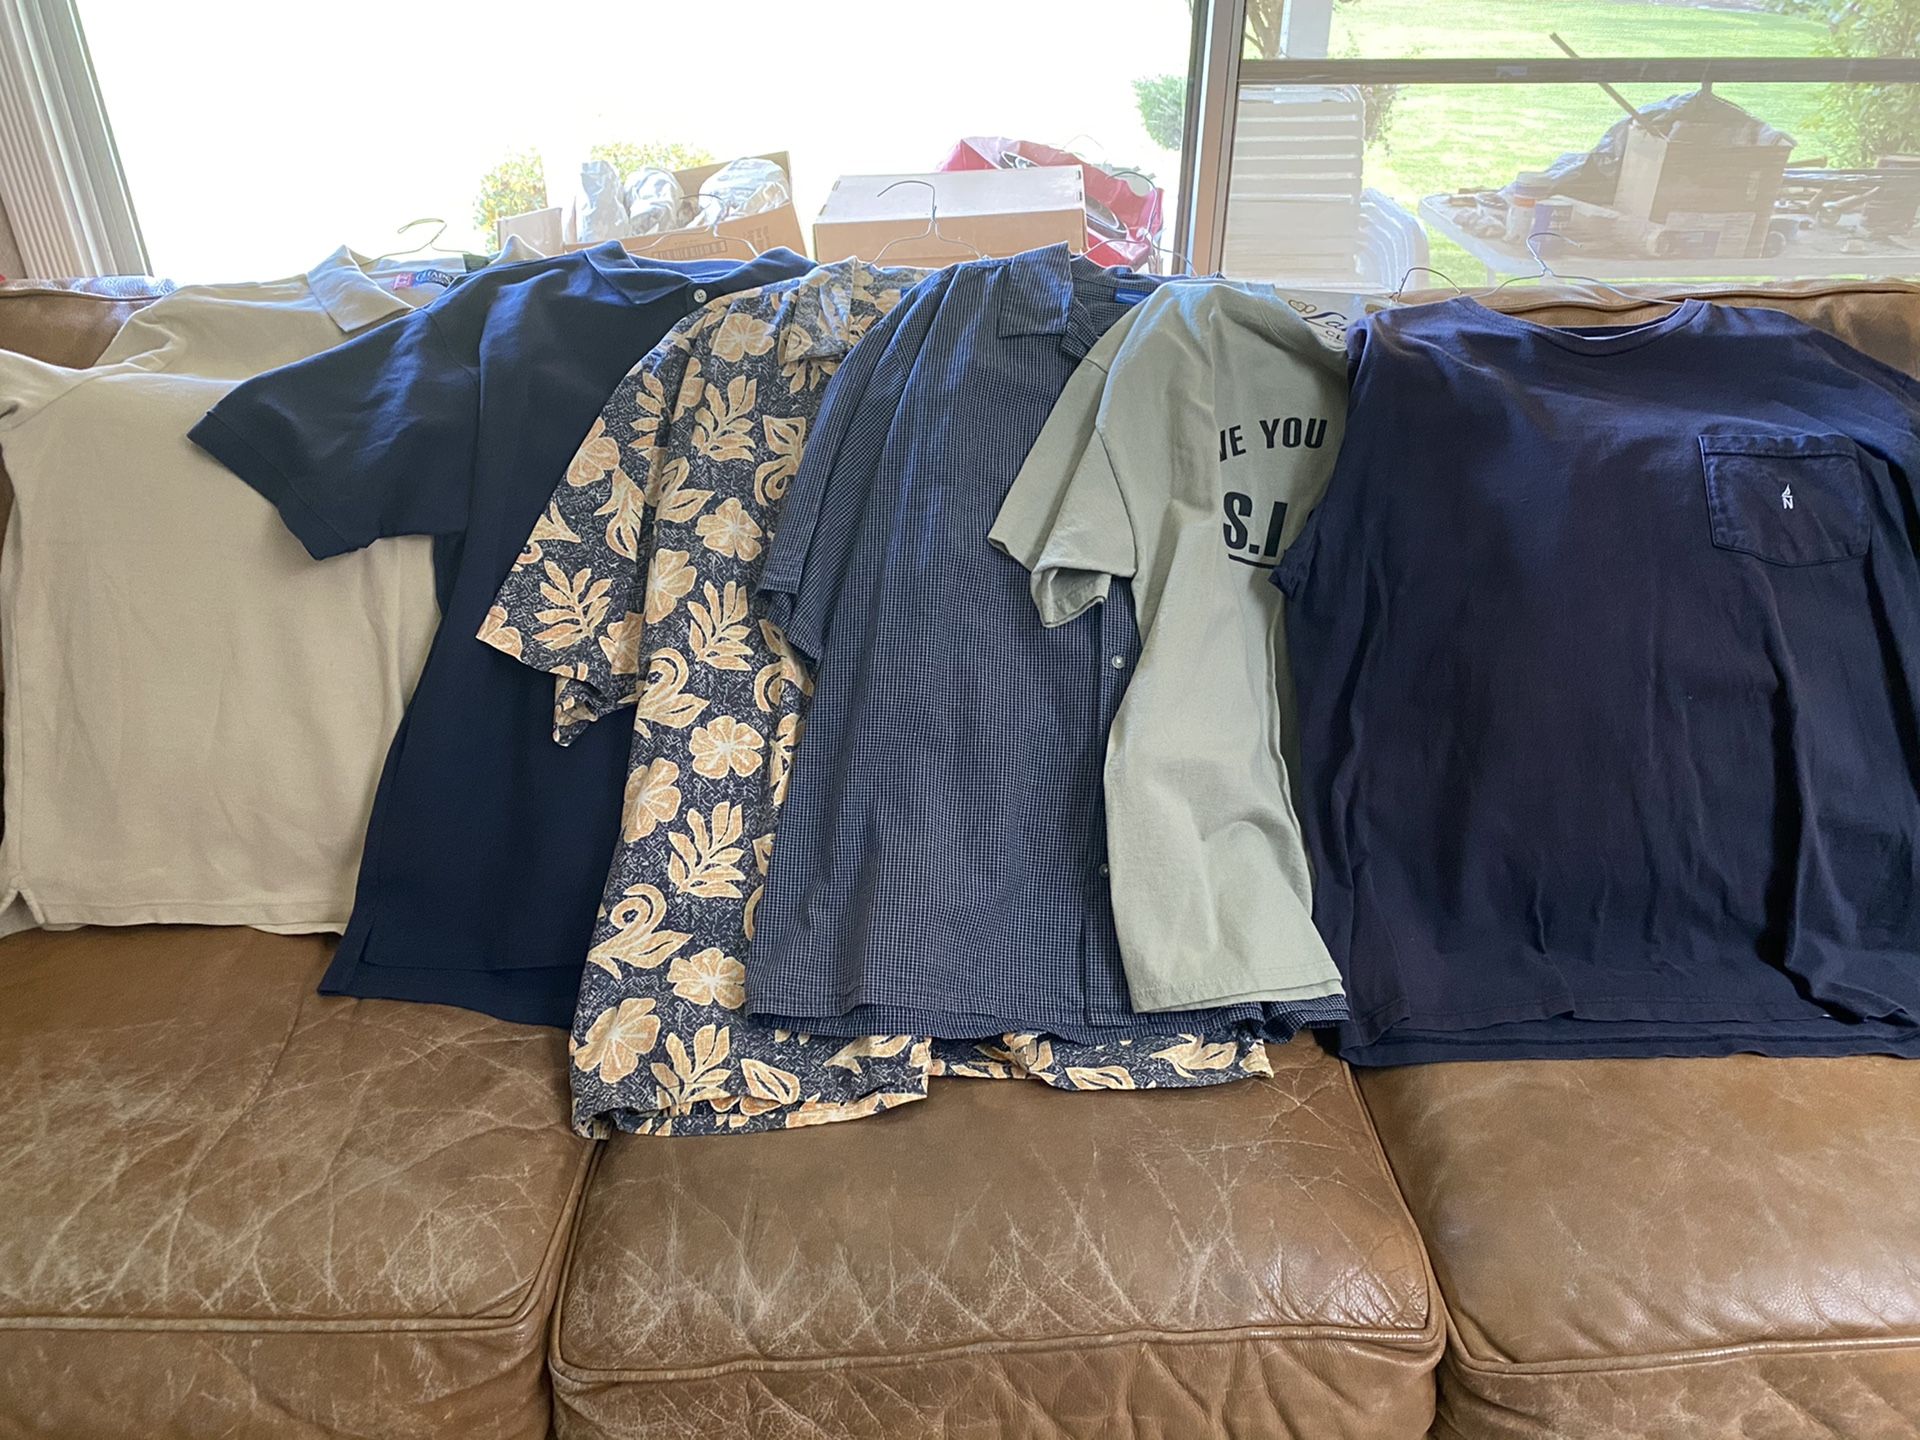 New men’s 13 T-Shirts & Button shirts size XL $3-4 each